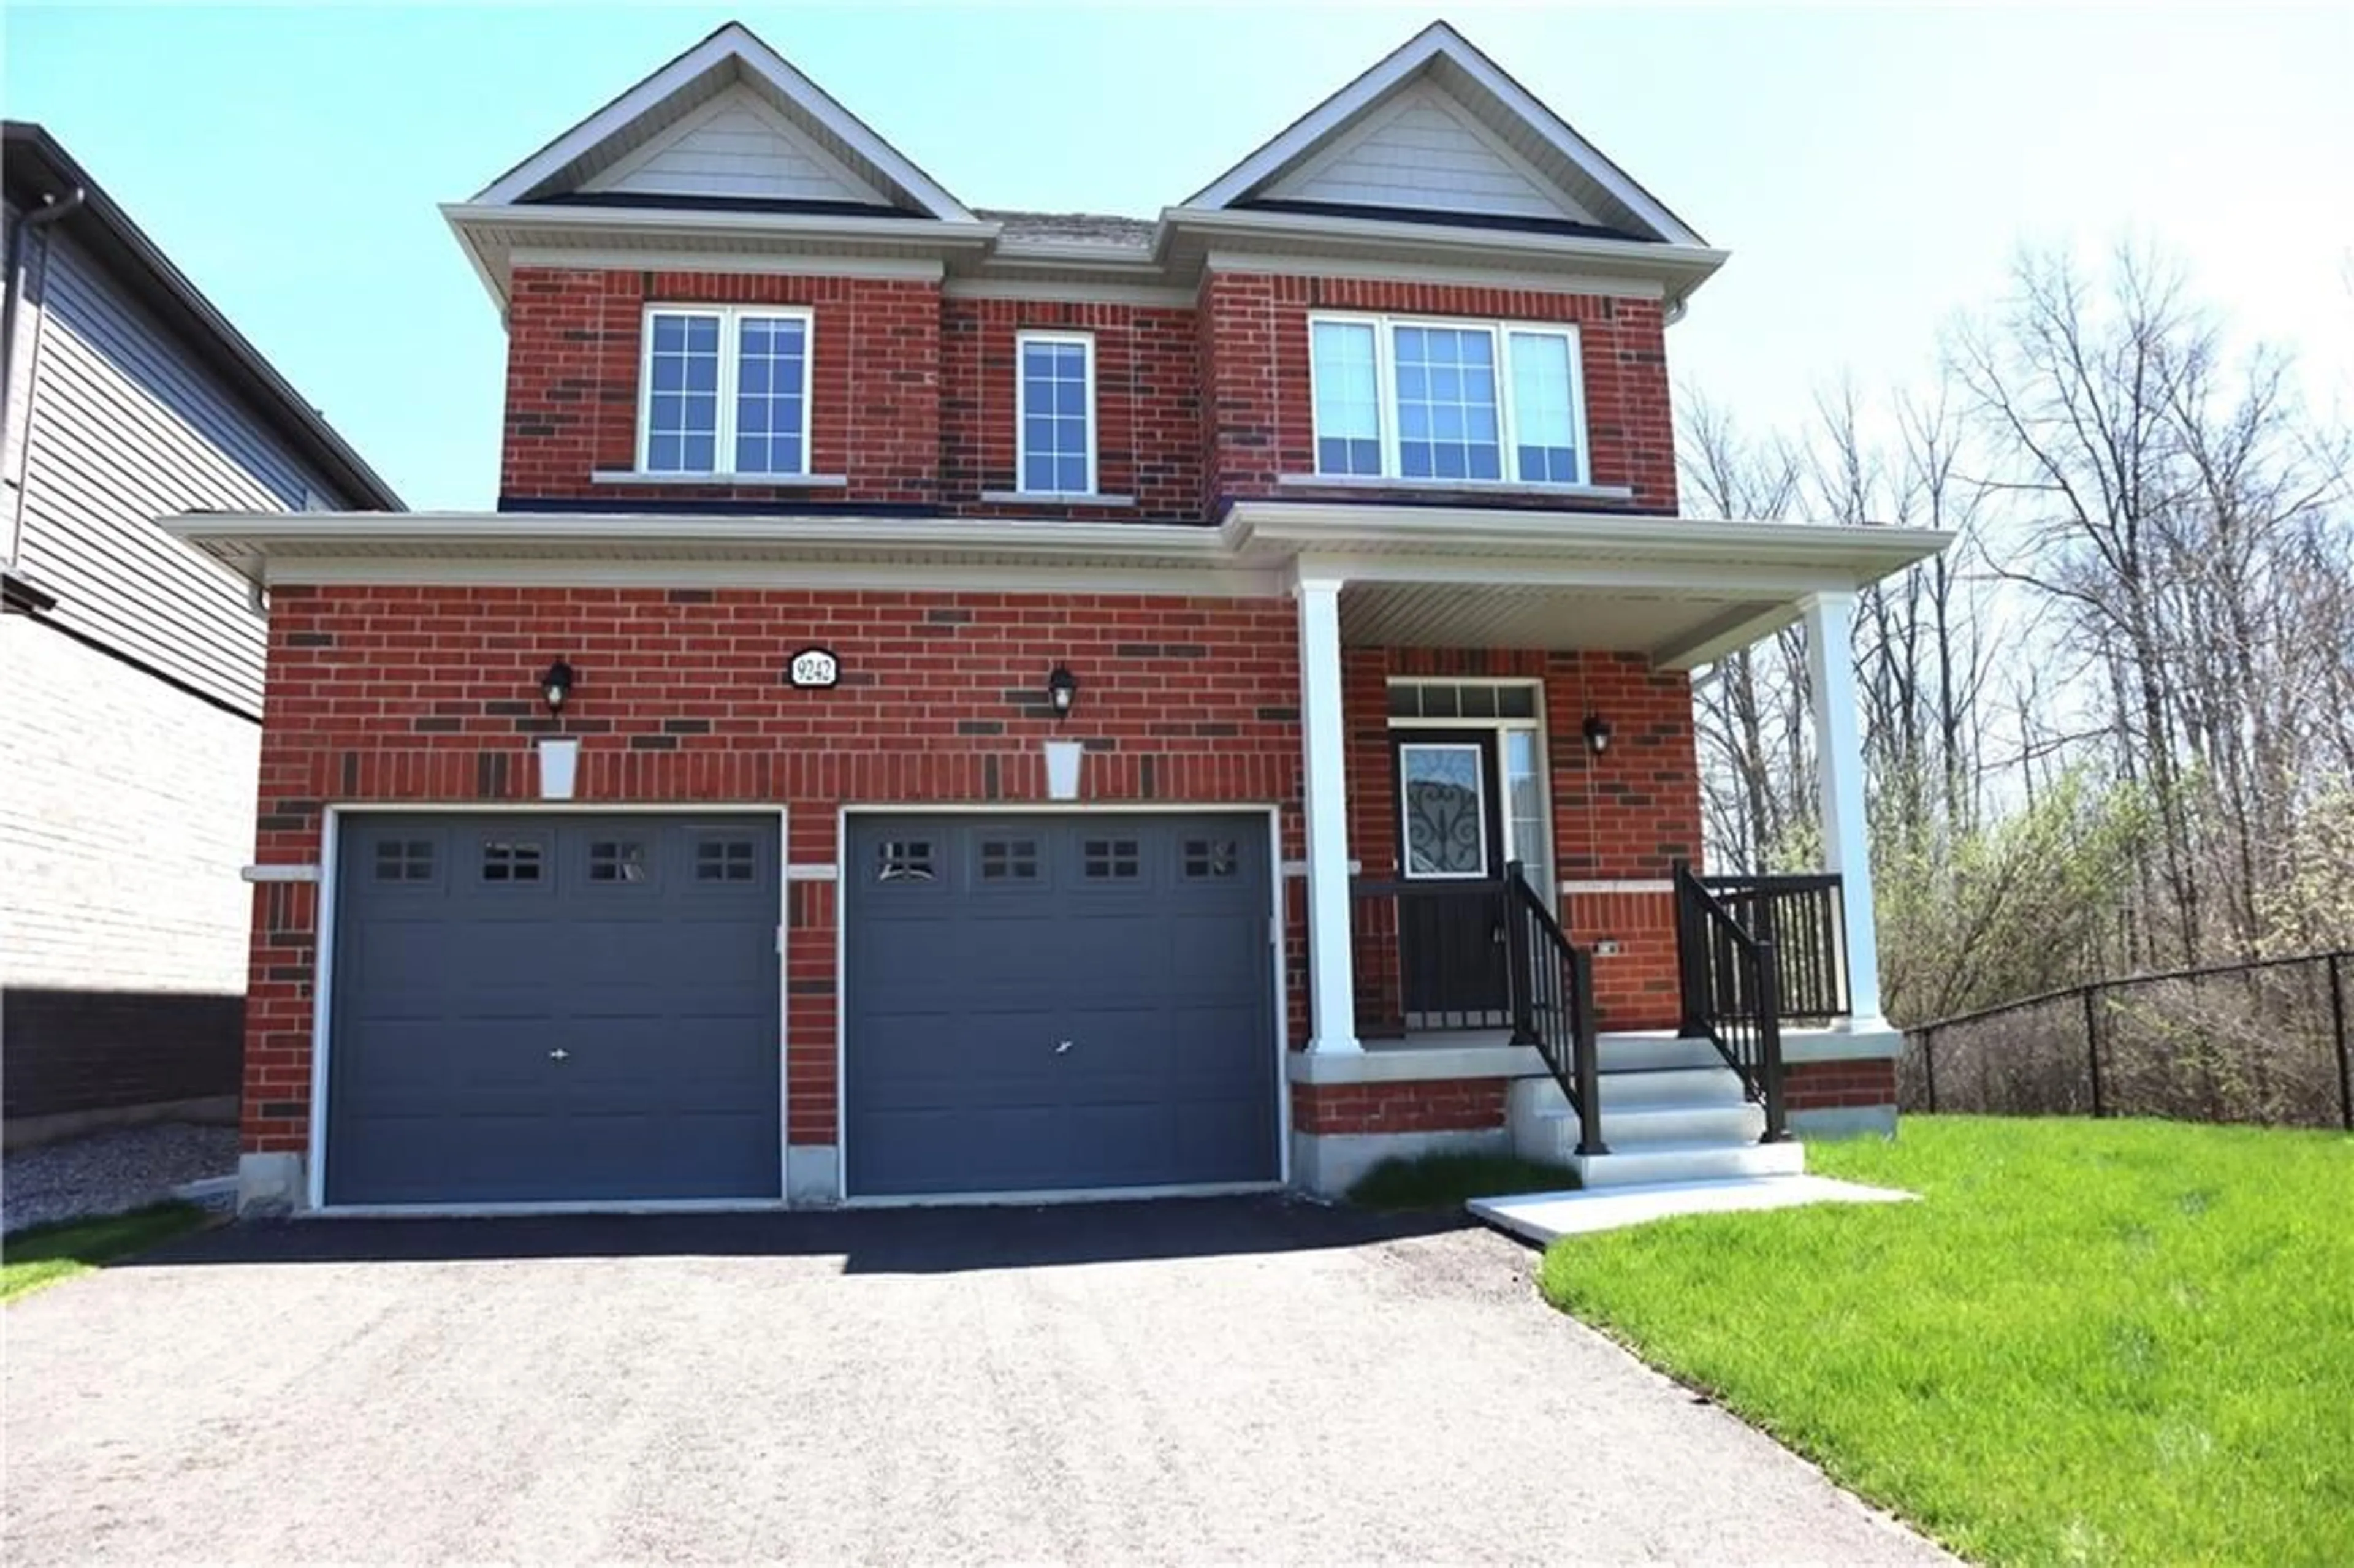 Home with brick exterior material for 9242 WHITE OAK Ave, Niagara Falls Ontario L2G 3P6